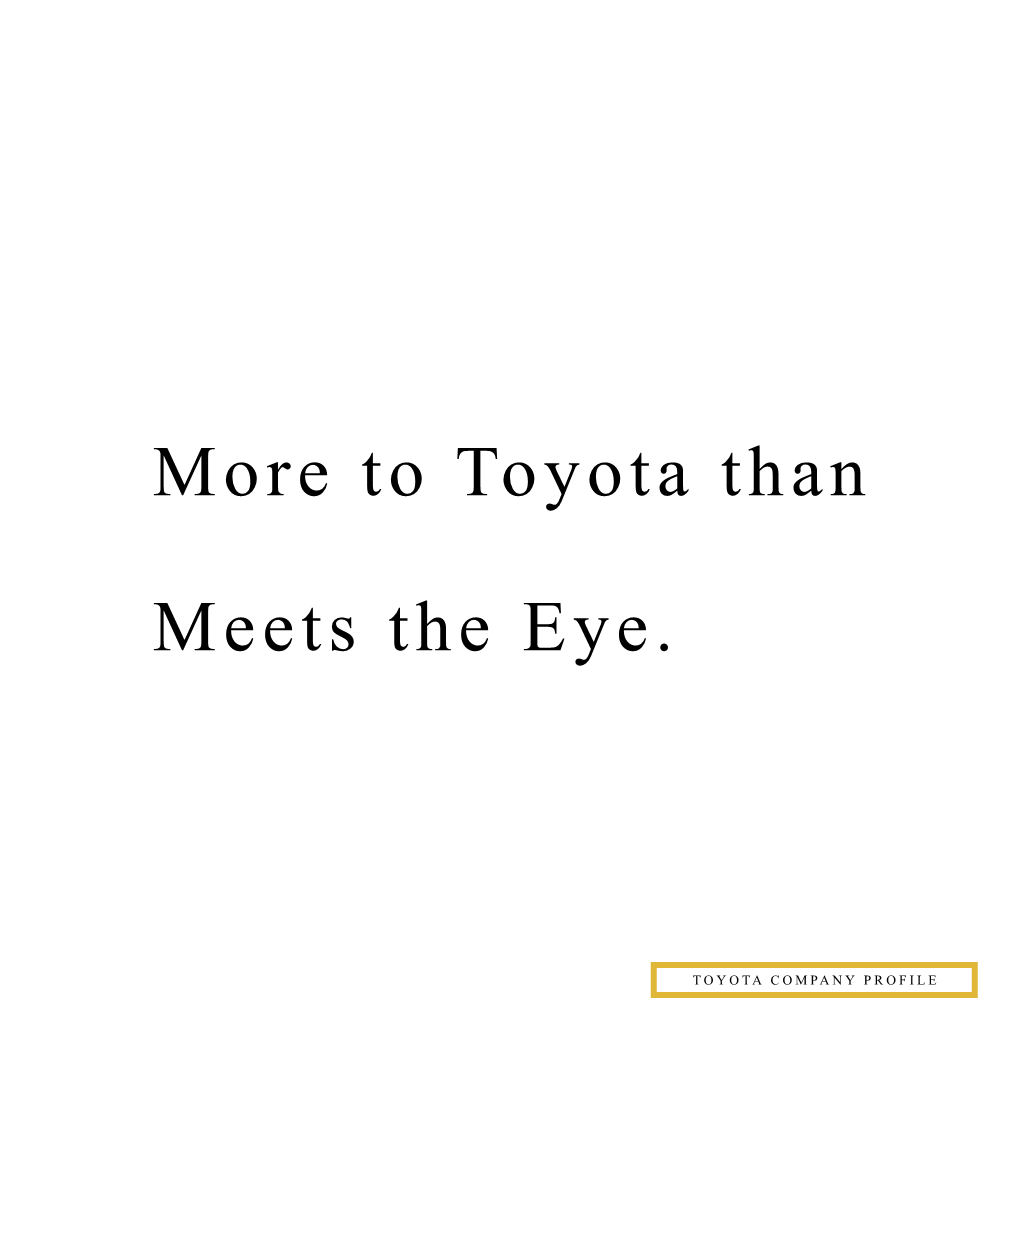 Toyota Company Profile